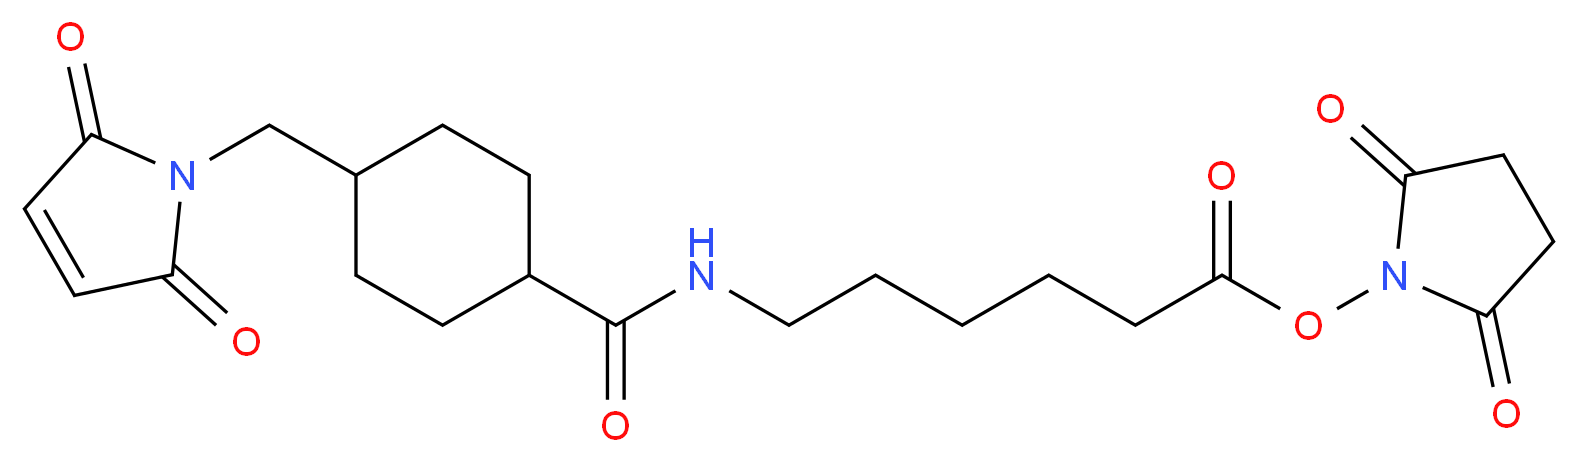 N-Succinimidyl 6-[[4-(Maleimidomethyl)cyclohexyl]carboxamido] Caproate_Molecular_structure_CAS_125559-00-4)